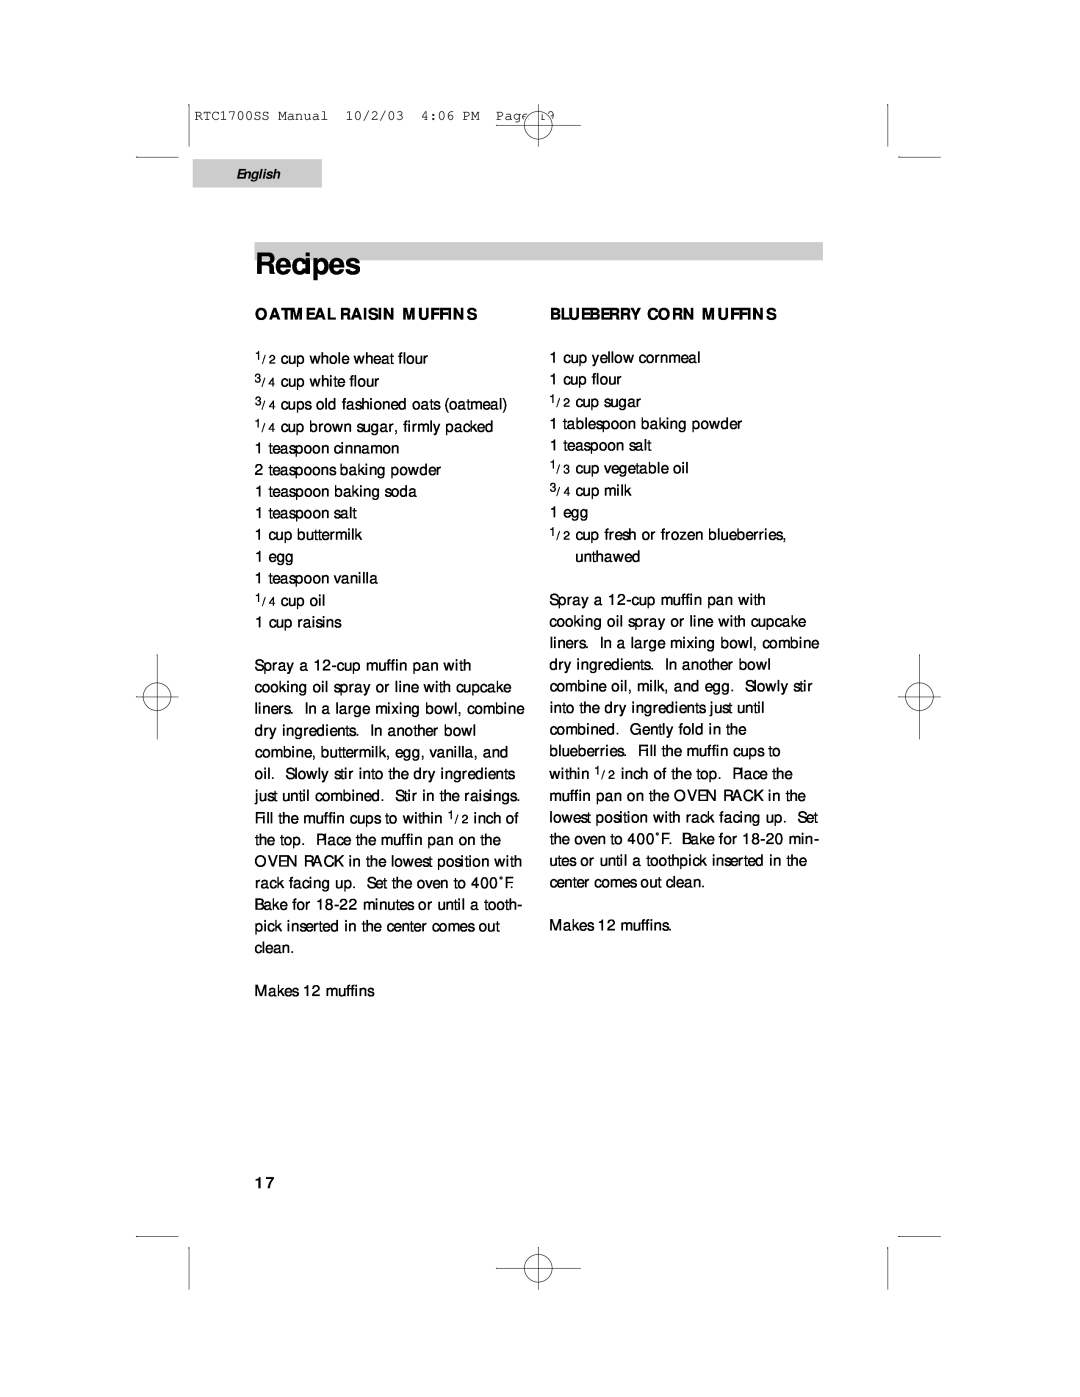 Haier RTC1700SS user manual Recipes, English, Oatmeal Raisin Muffins, Blueberry Corn Muffins 